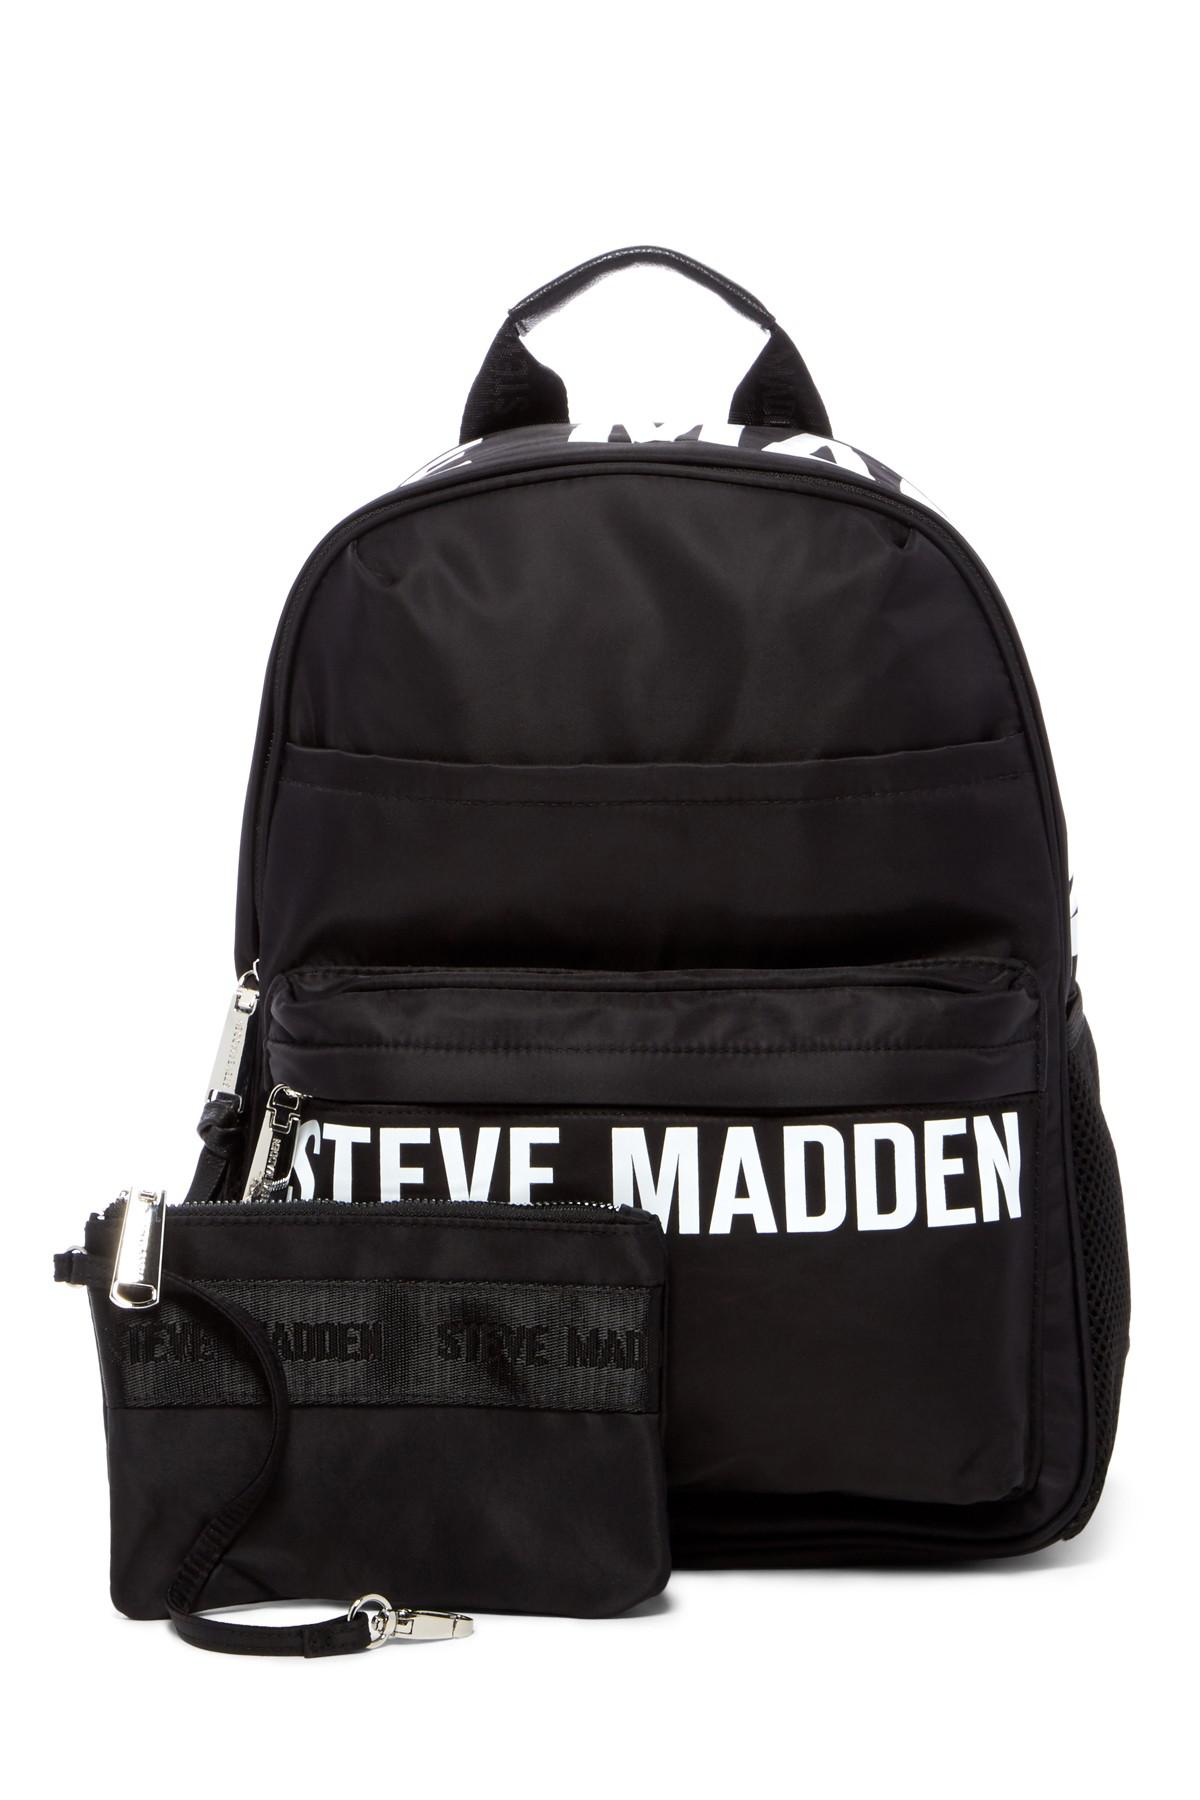 Steve Madden Placement Print Nylon Backpack in Black | Lyst